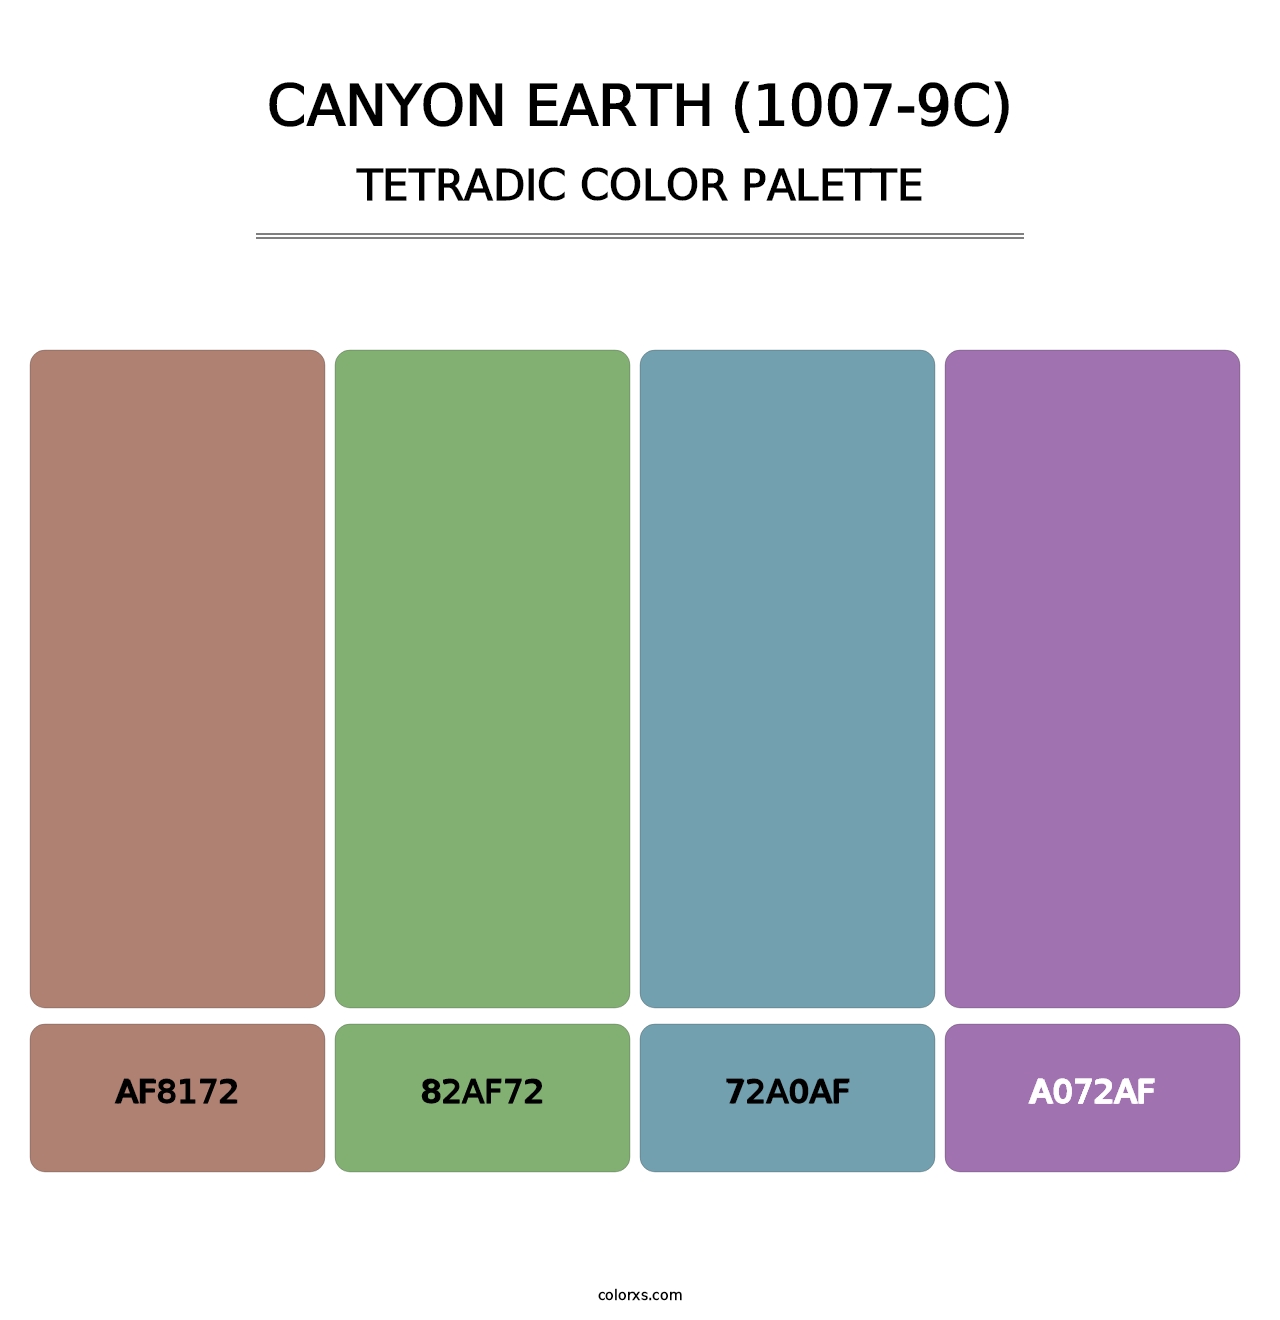 Canyon Earth (1007-9C) - Tetradic Color Palette